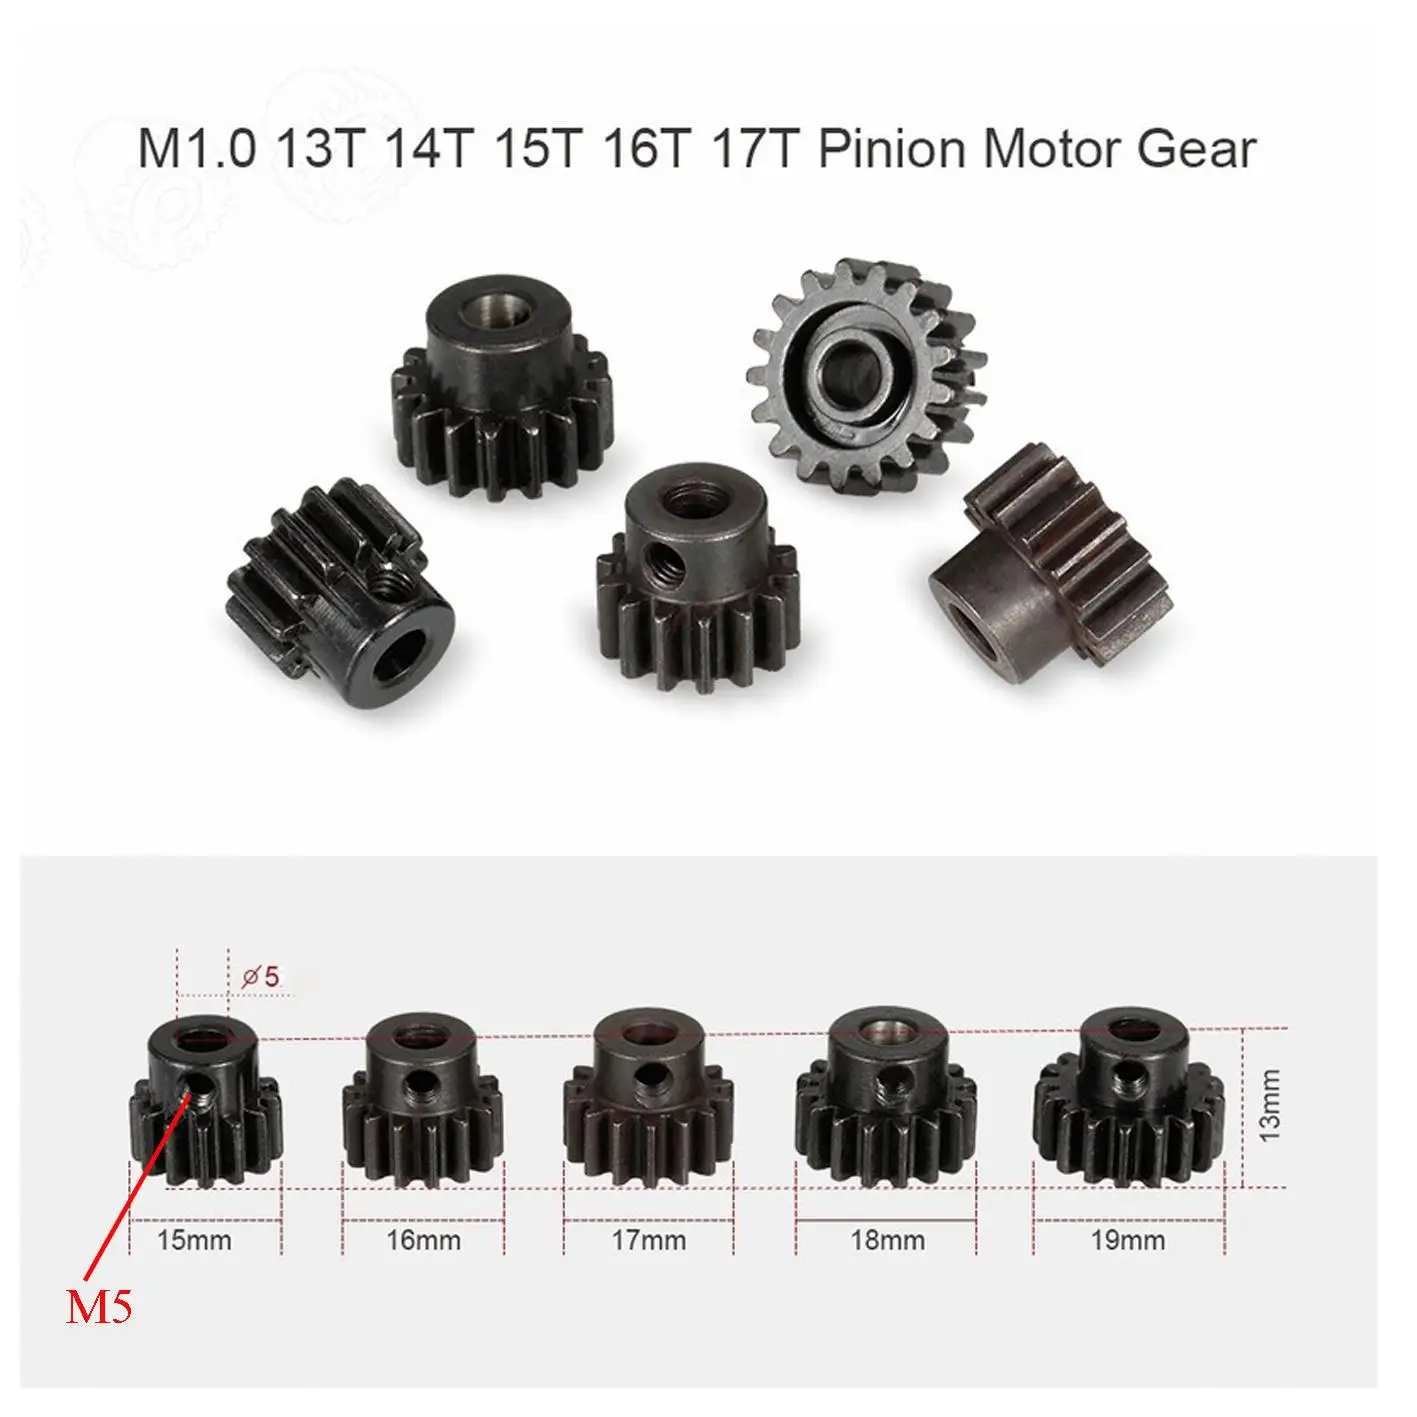 

10PCS 25DP motor gear 13T, 14T, 15T, 16T, 17T suitable for 1/8 series remote control model car Motor shaft bore 5mm M1.0